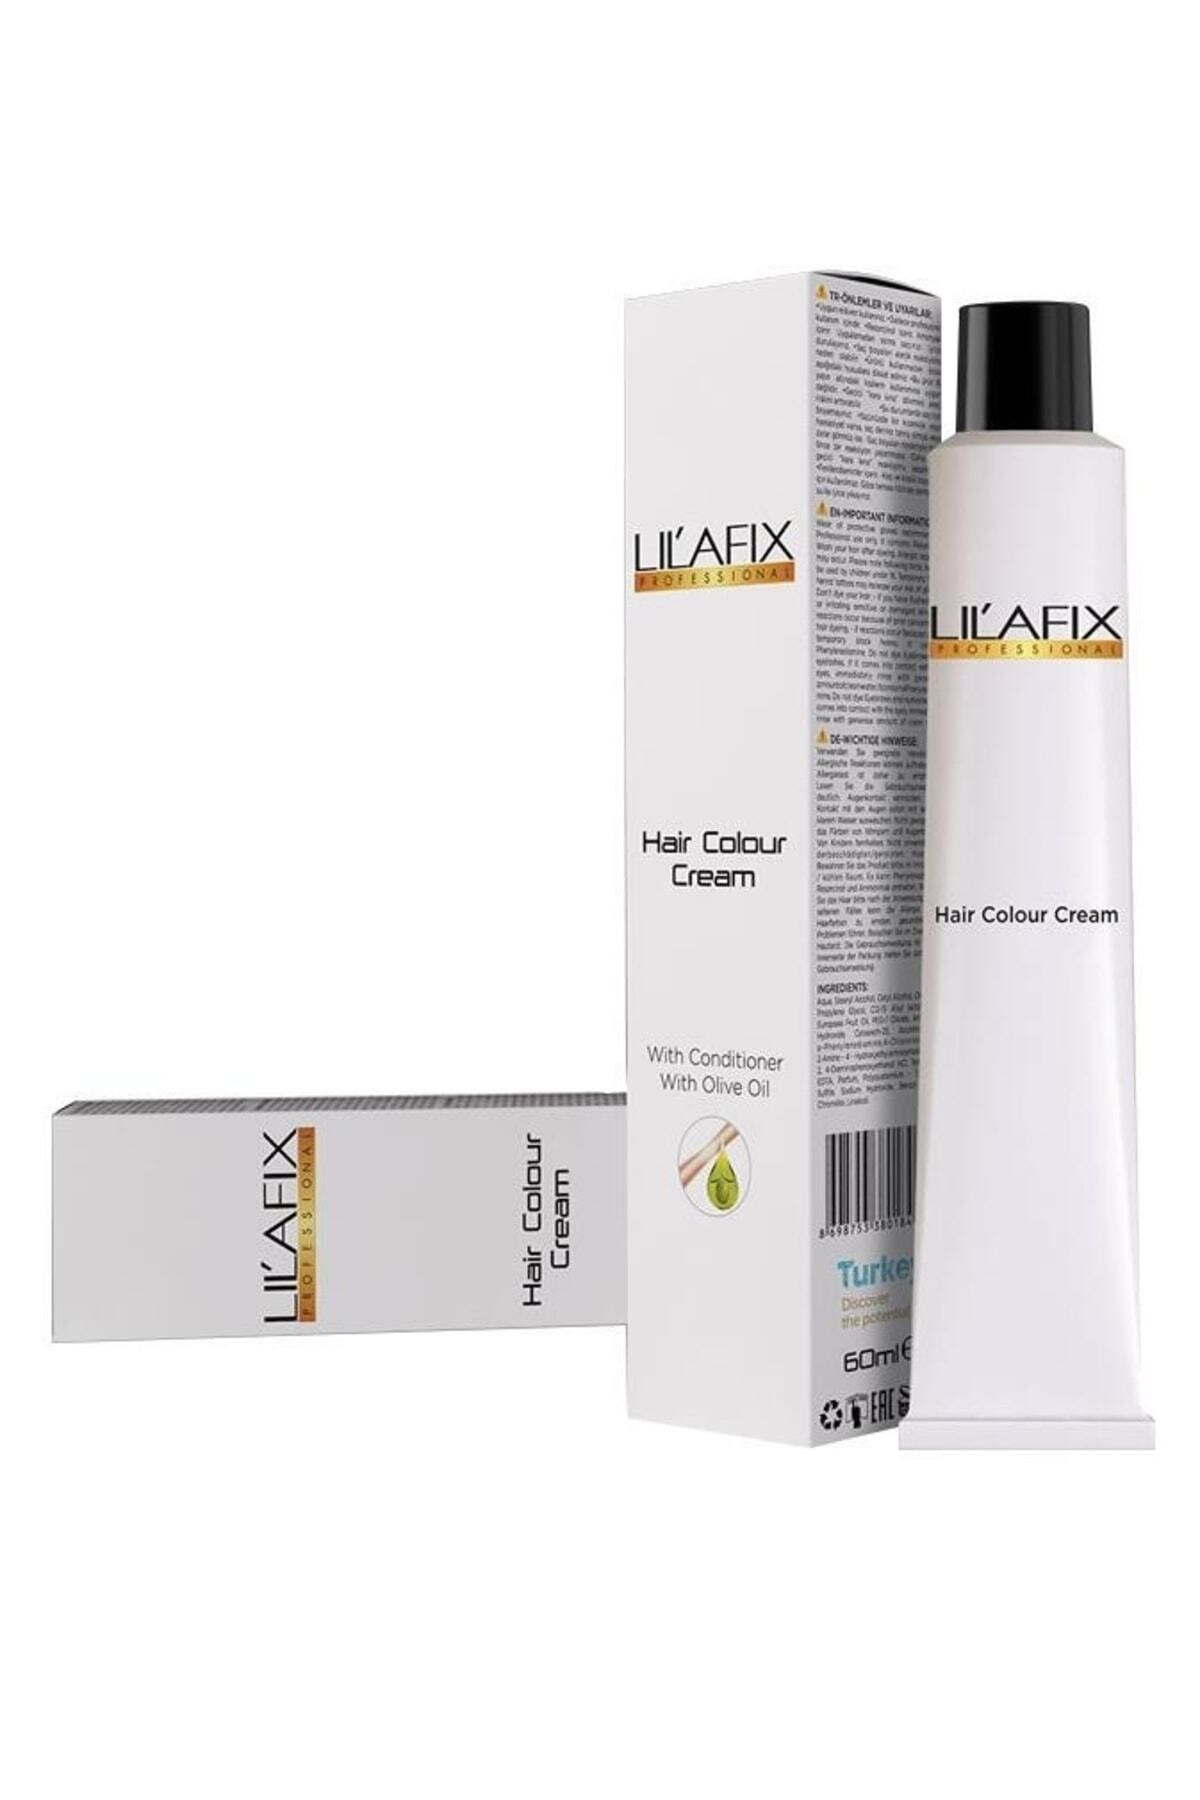 Lilafix Permament Hair Color Cream Natural Appearance 0/02 White 60ml Buk64